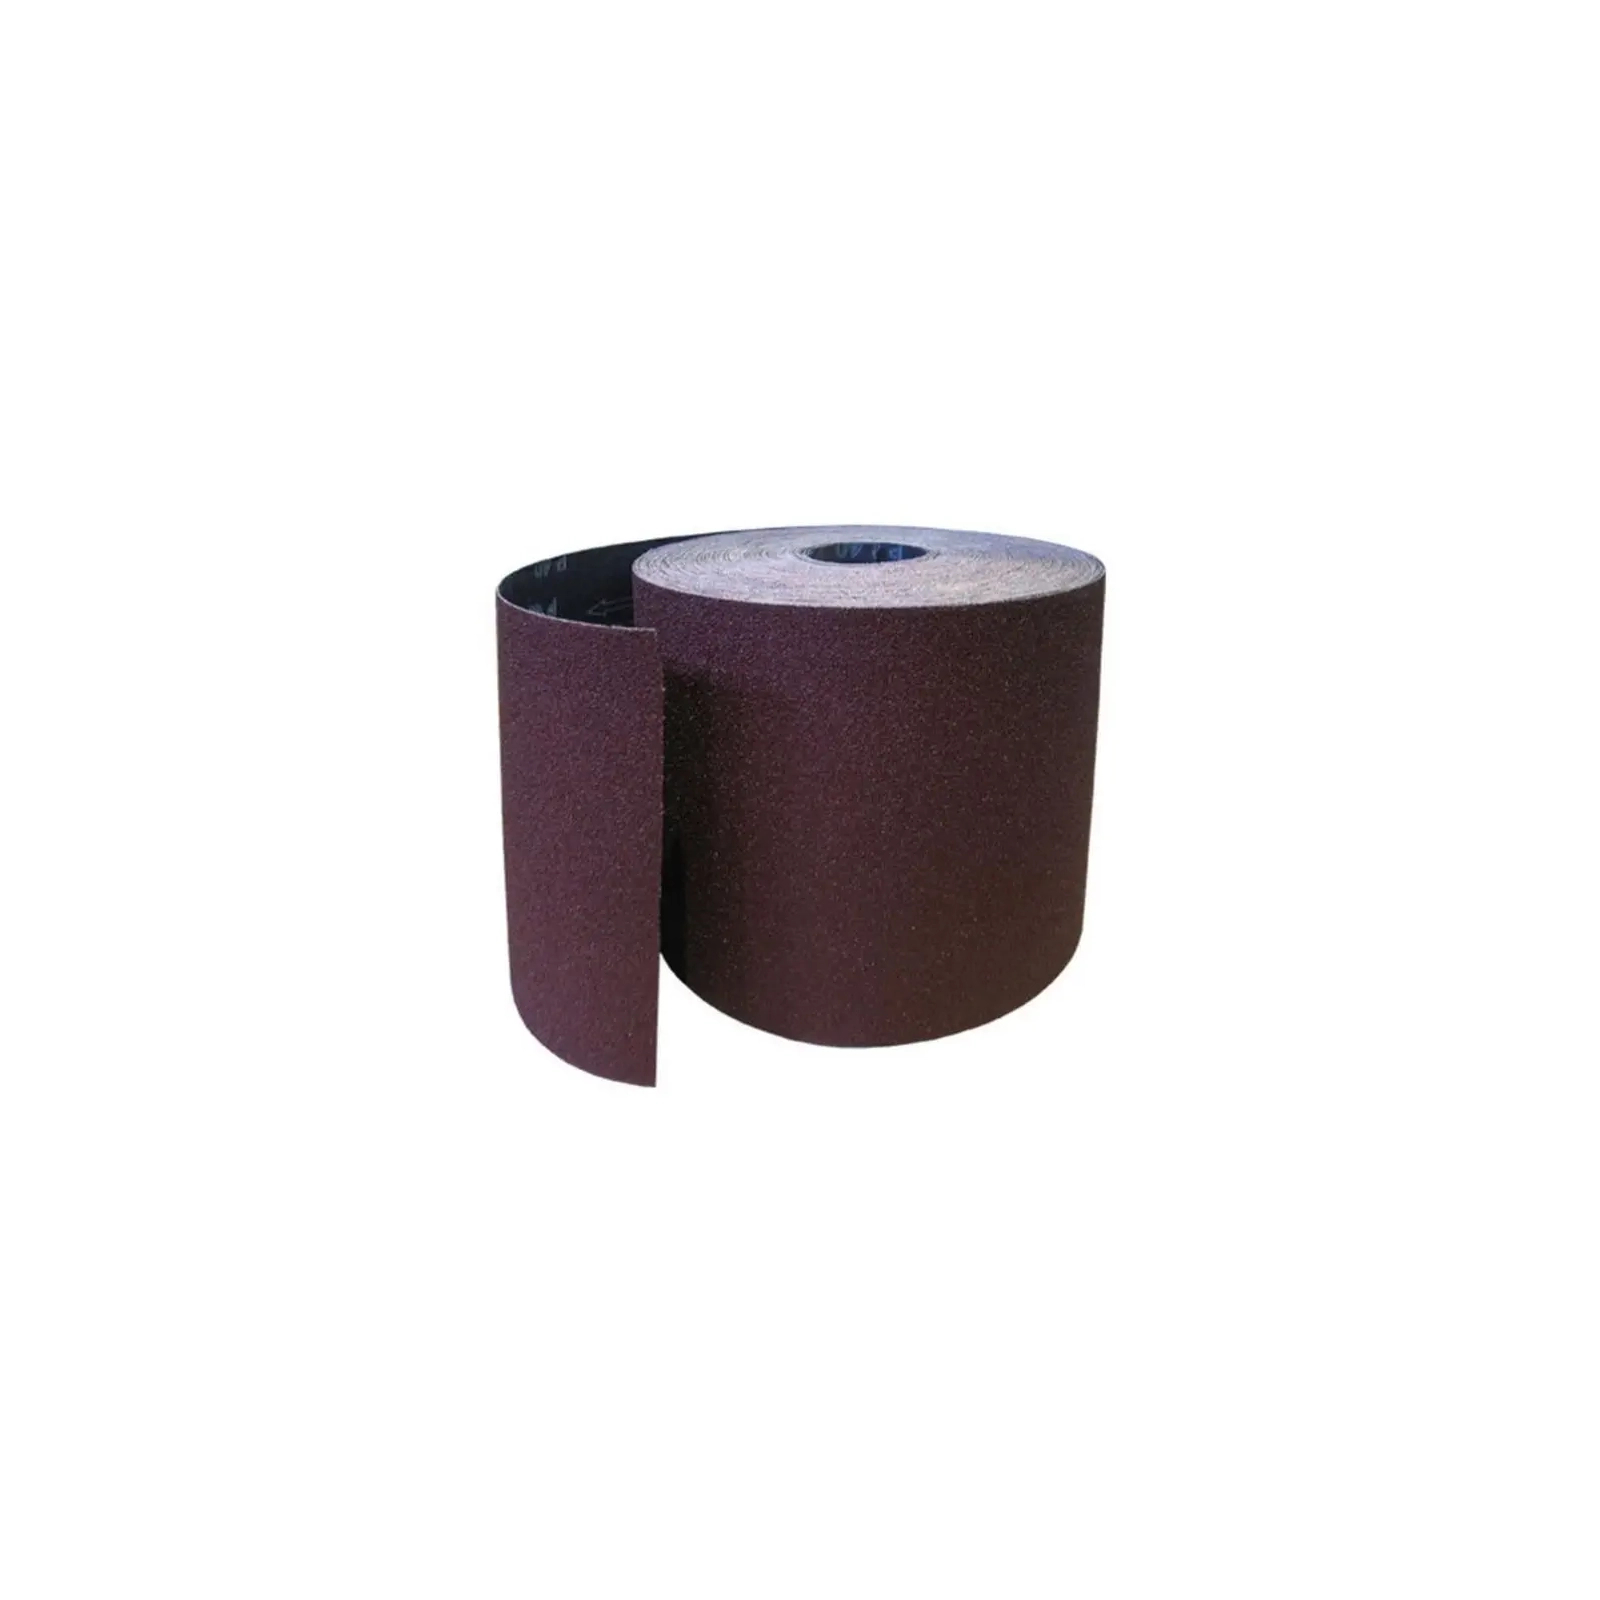 Наждачная бумага Werk тканевое основание - 200мм х 30м, К40 (65880)